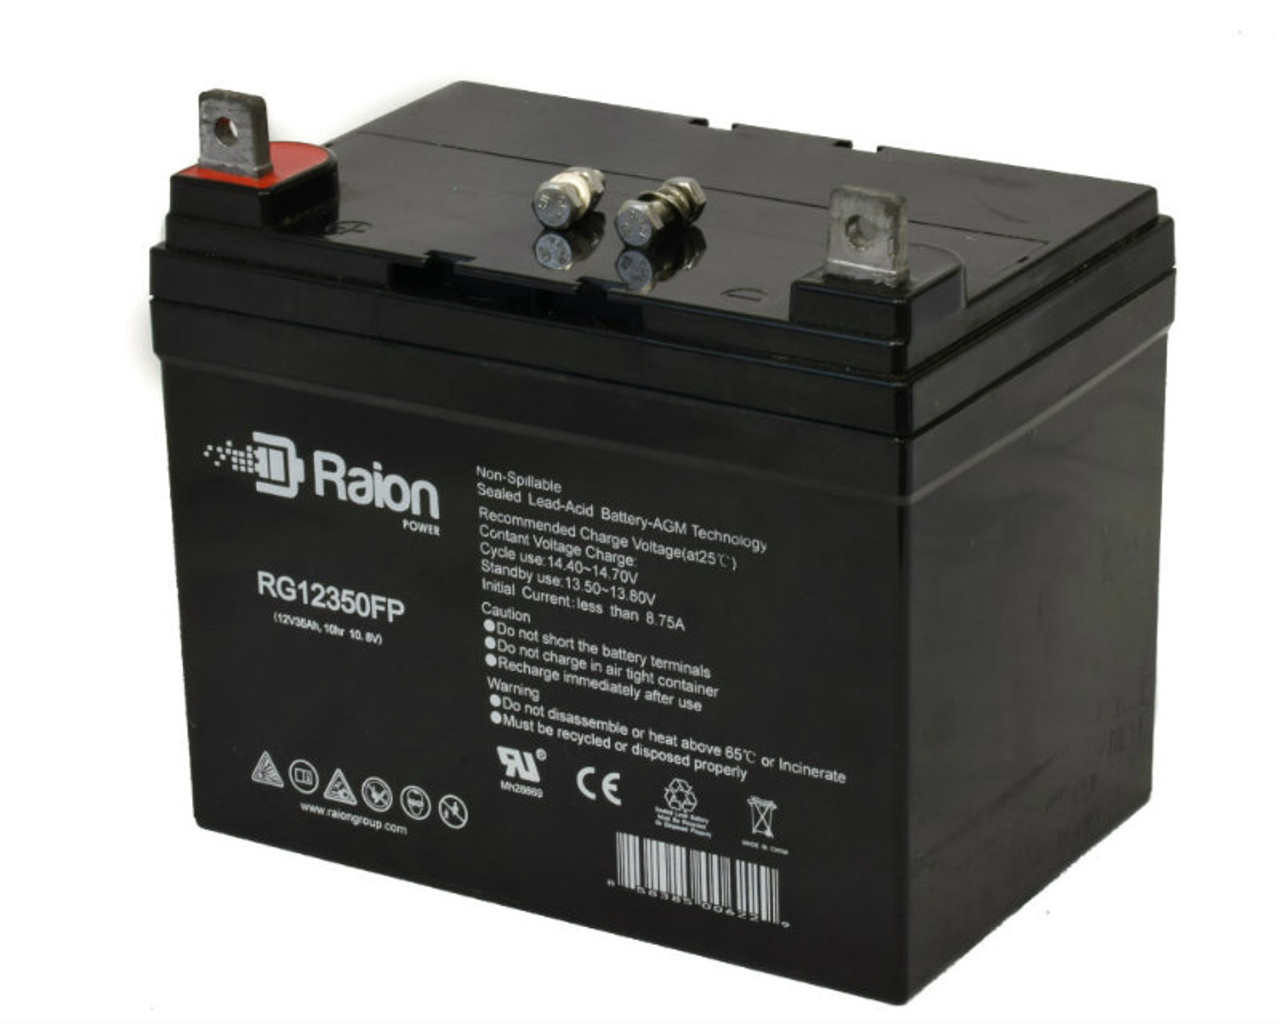 Raion Power Replacement 12V 35Ah RG12350FP Battery for Troy-Bilt GTX 18